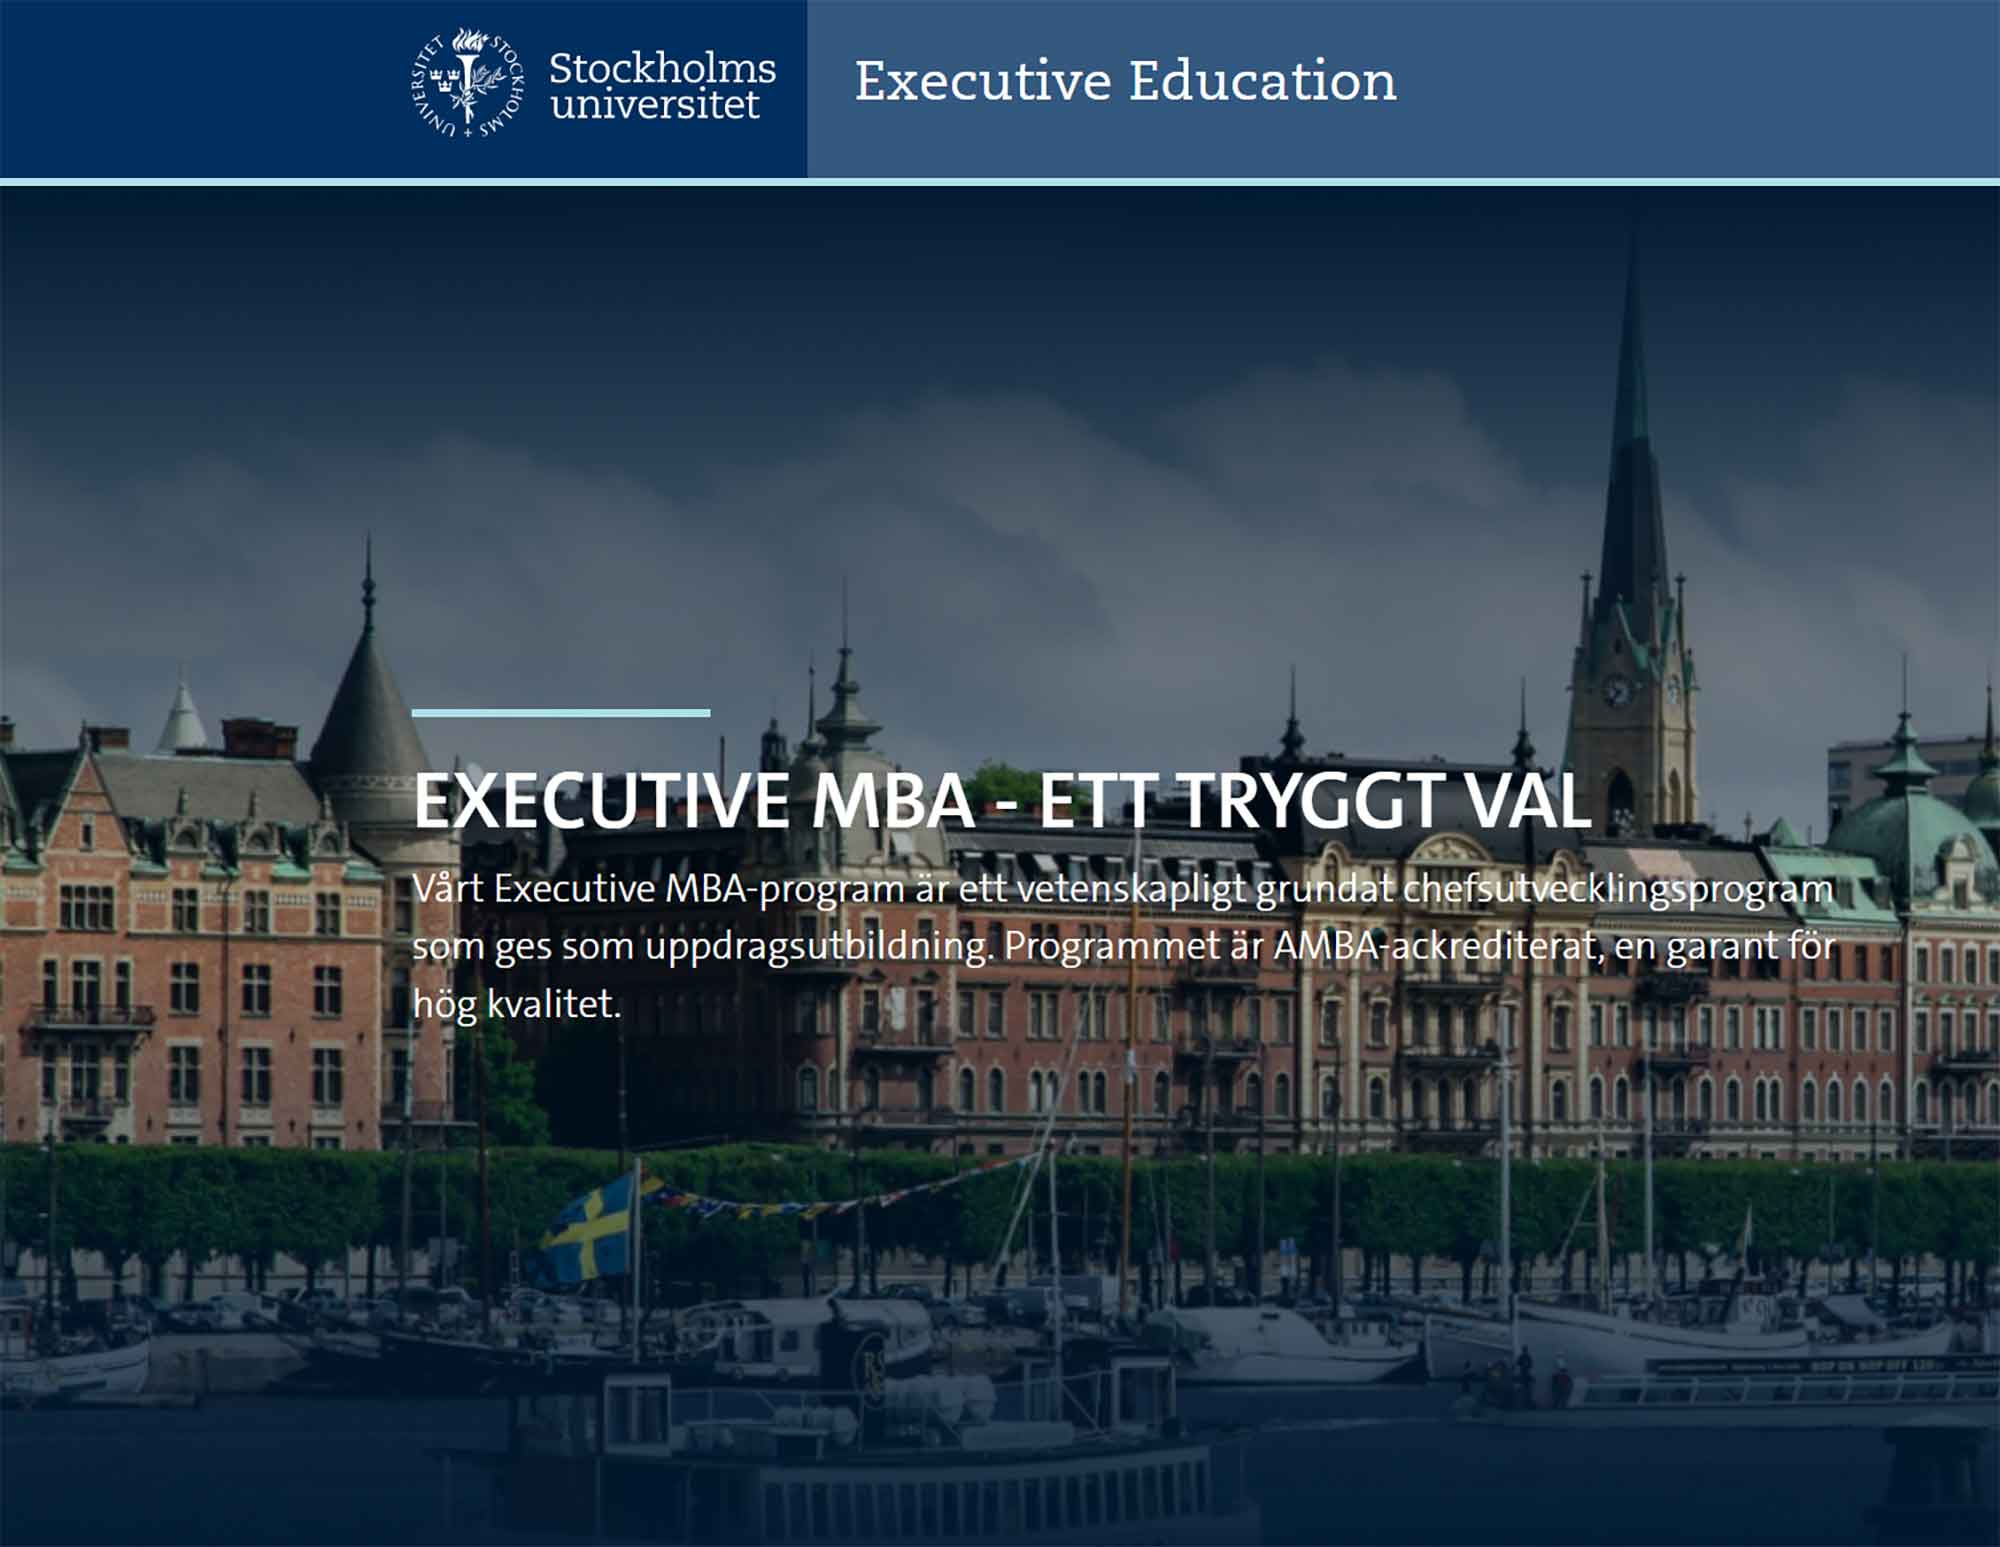 Stockholms Universitet Executive MBA